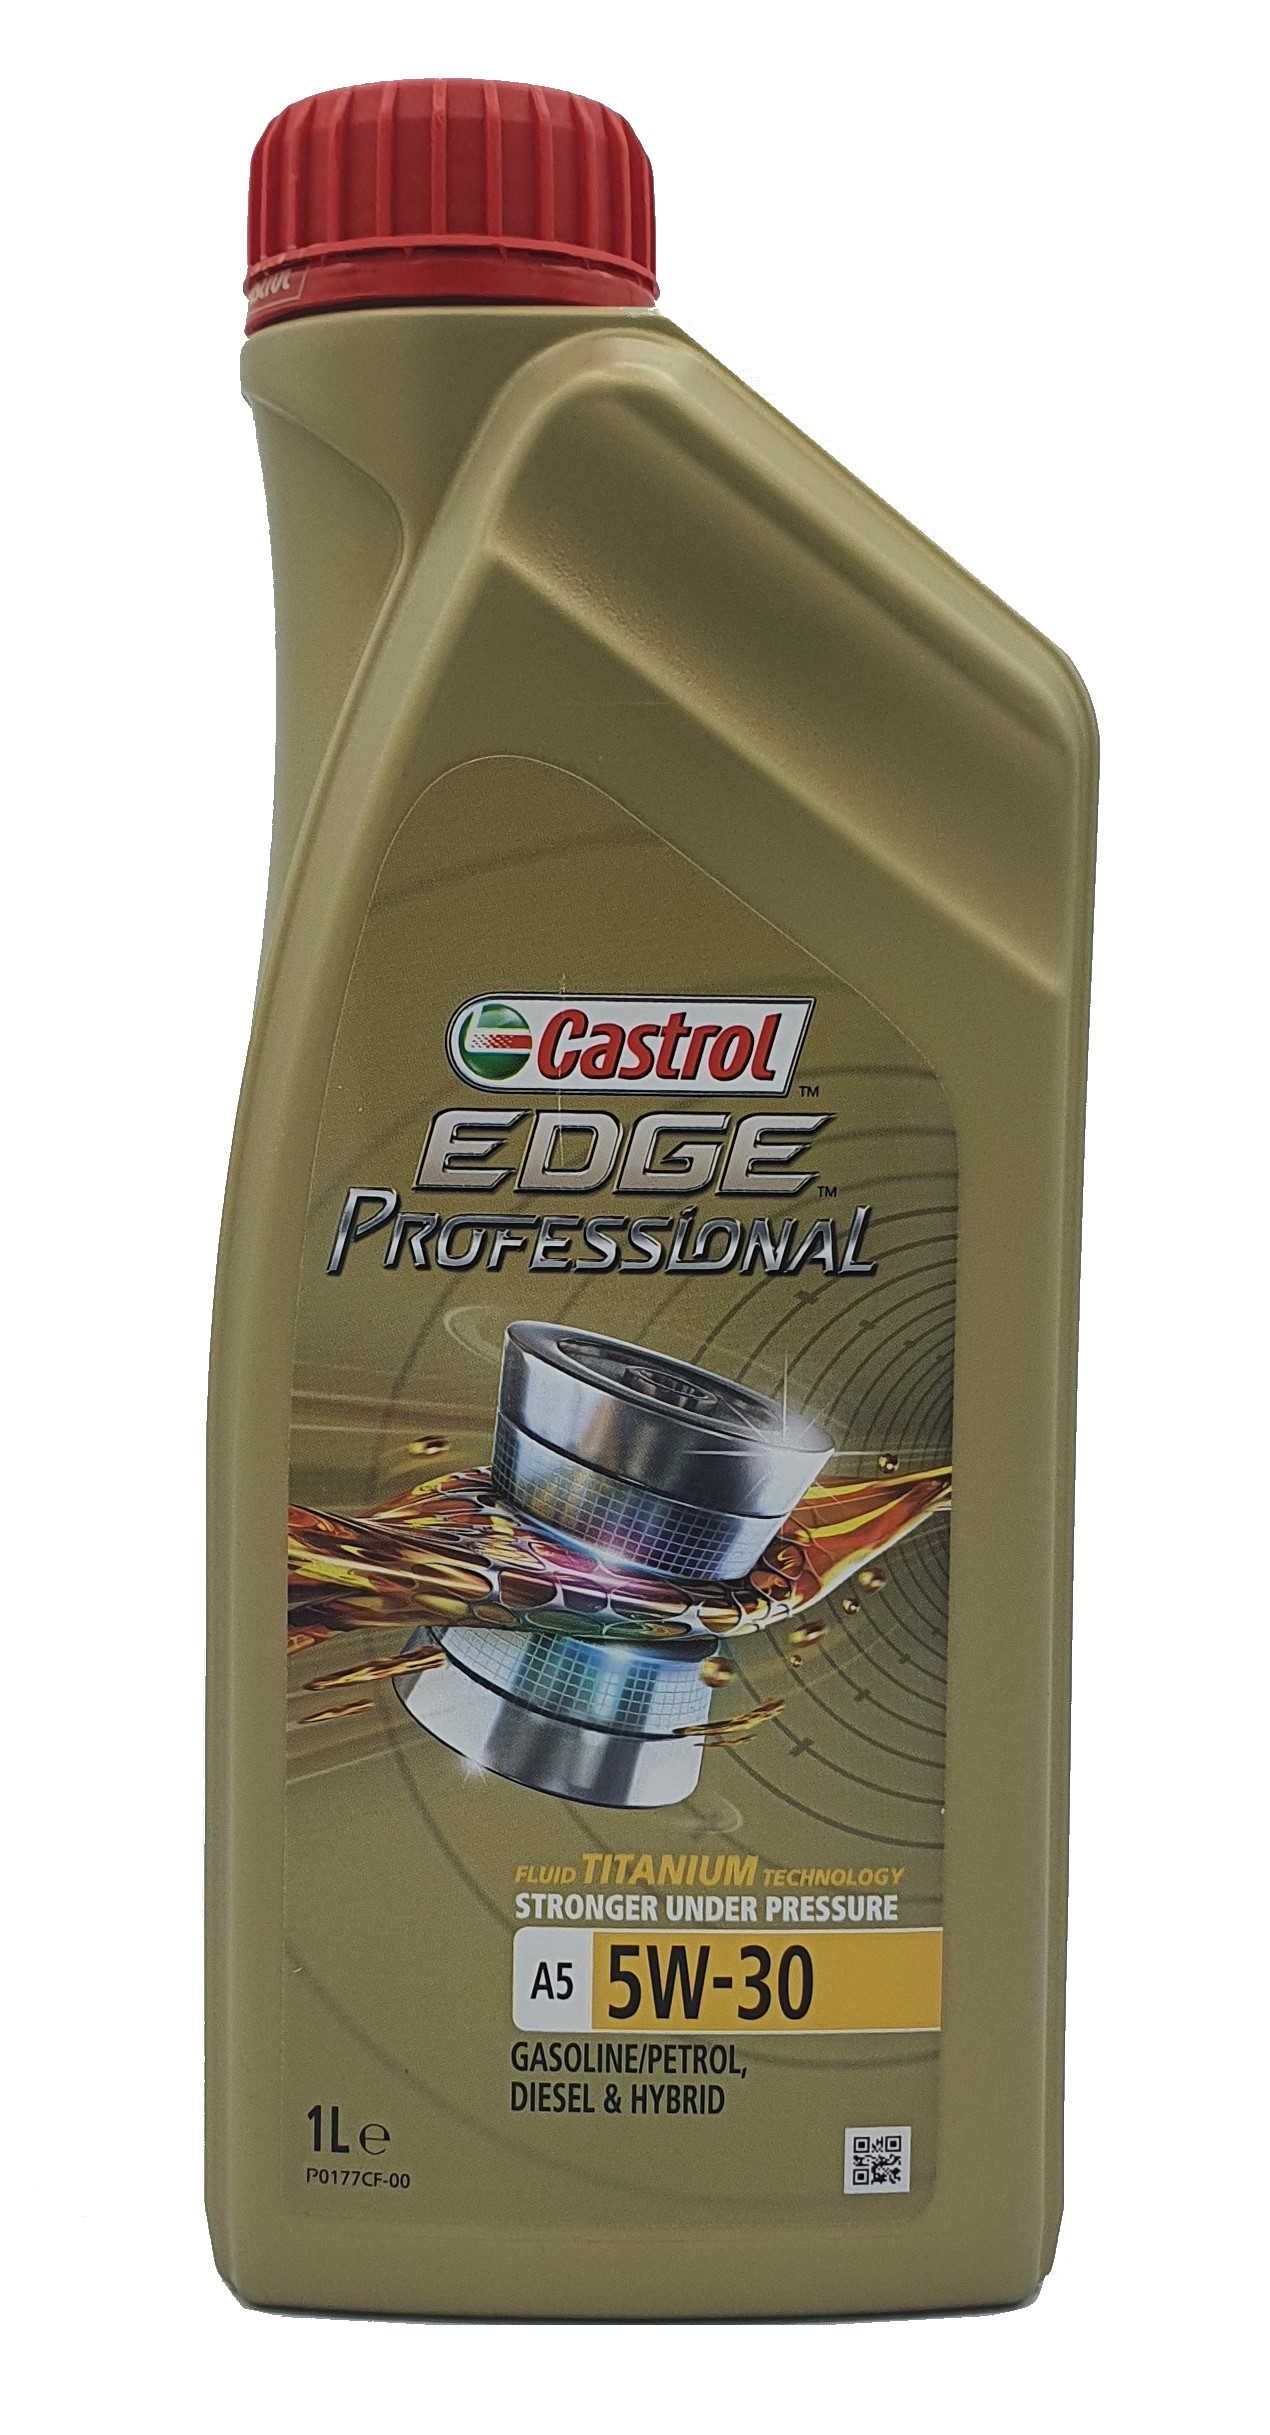 Castrol Edge Professional Fluid Titanium A5 5W-30 1 Liter